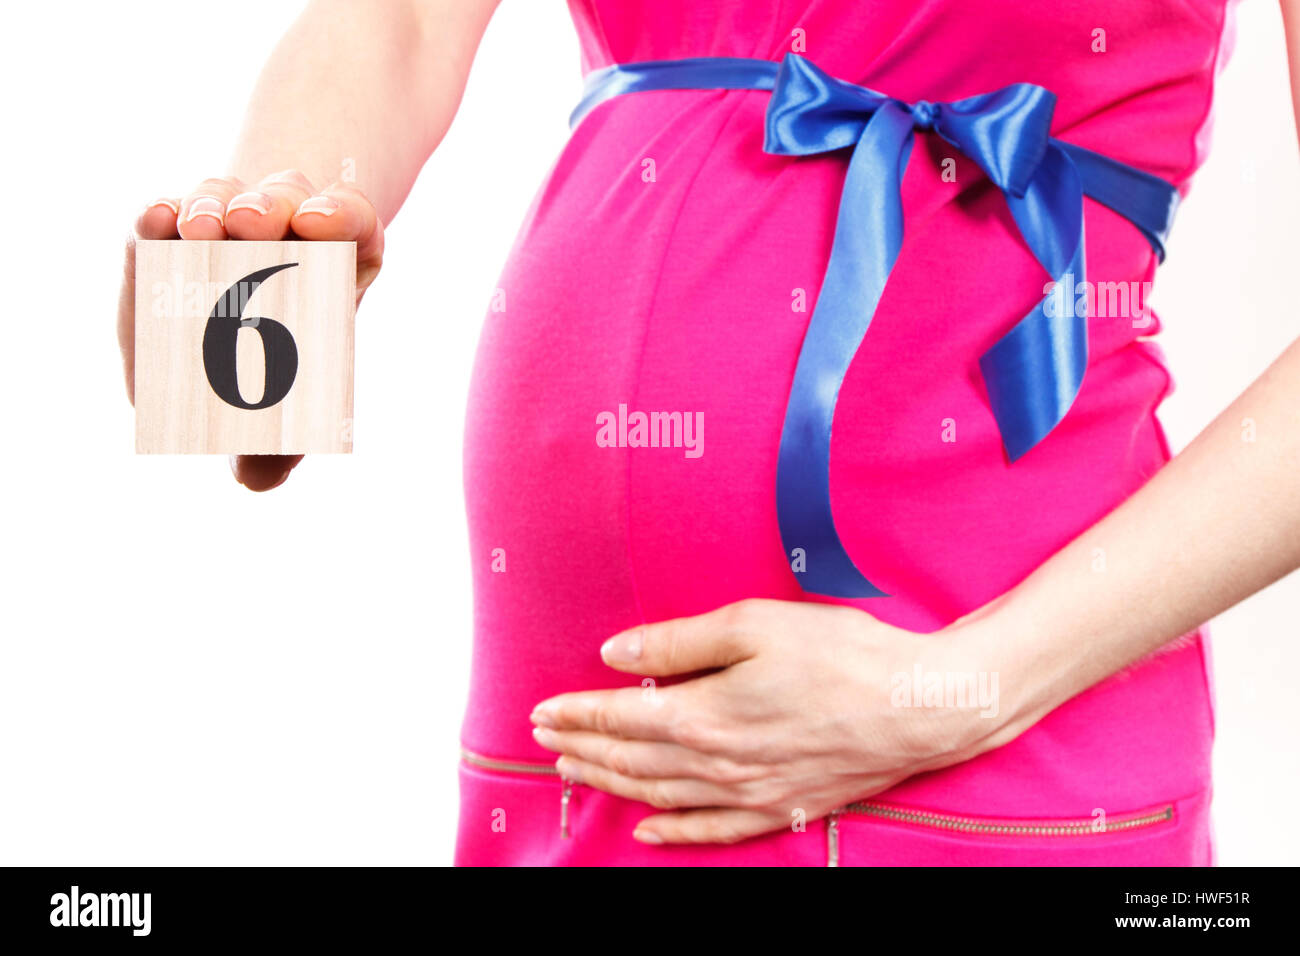 6 й месяц. 6 Месяц беременности. Живот на 6 месяце беременности. Беременный живот на 6 месяце. Фото беременных 6 месяцев.